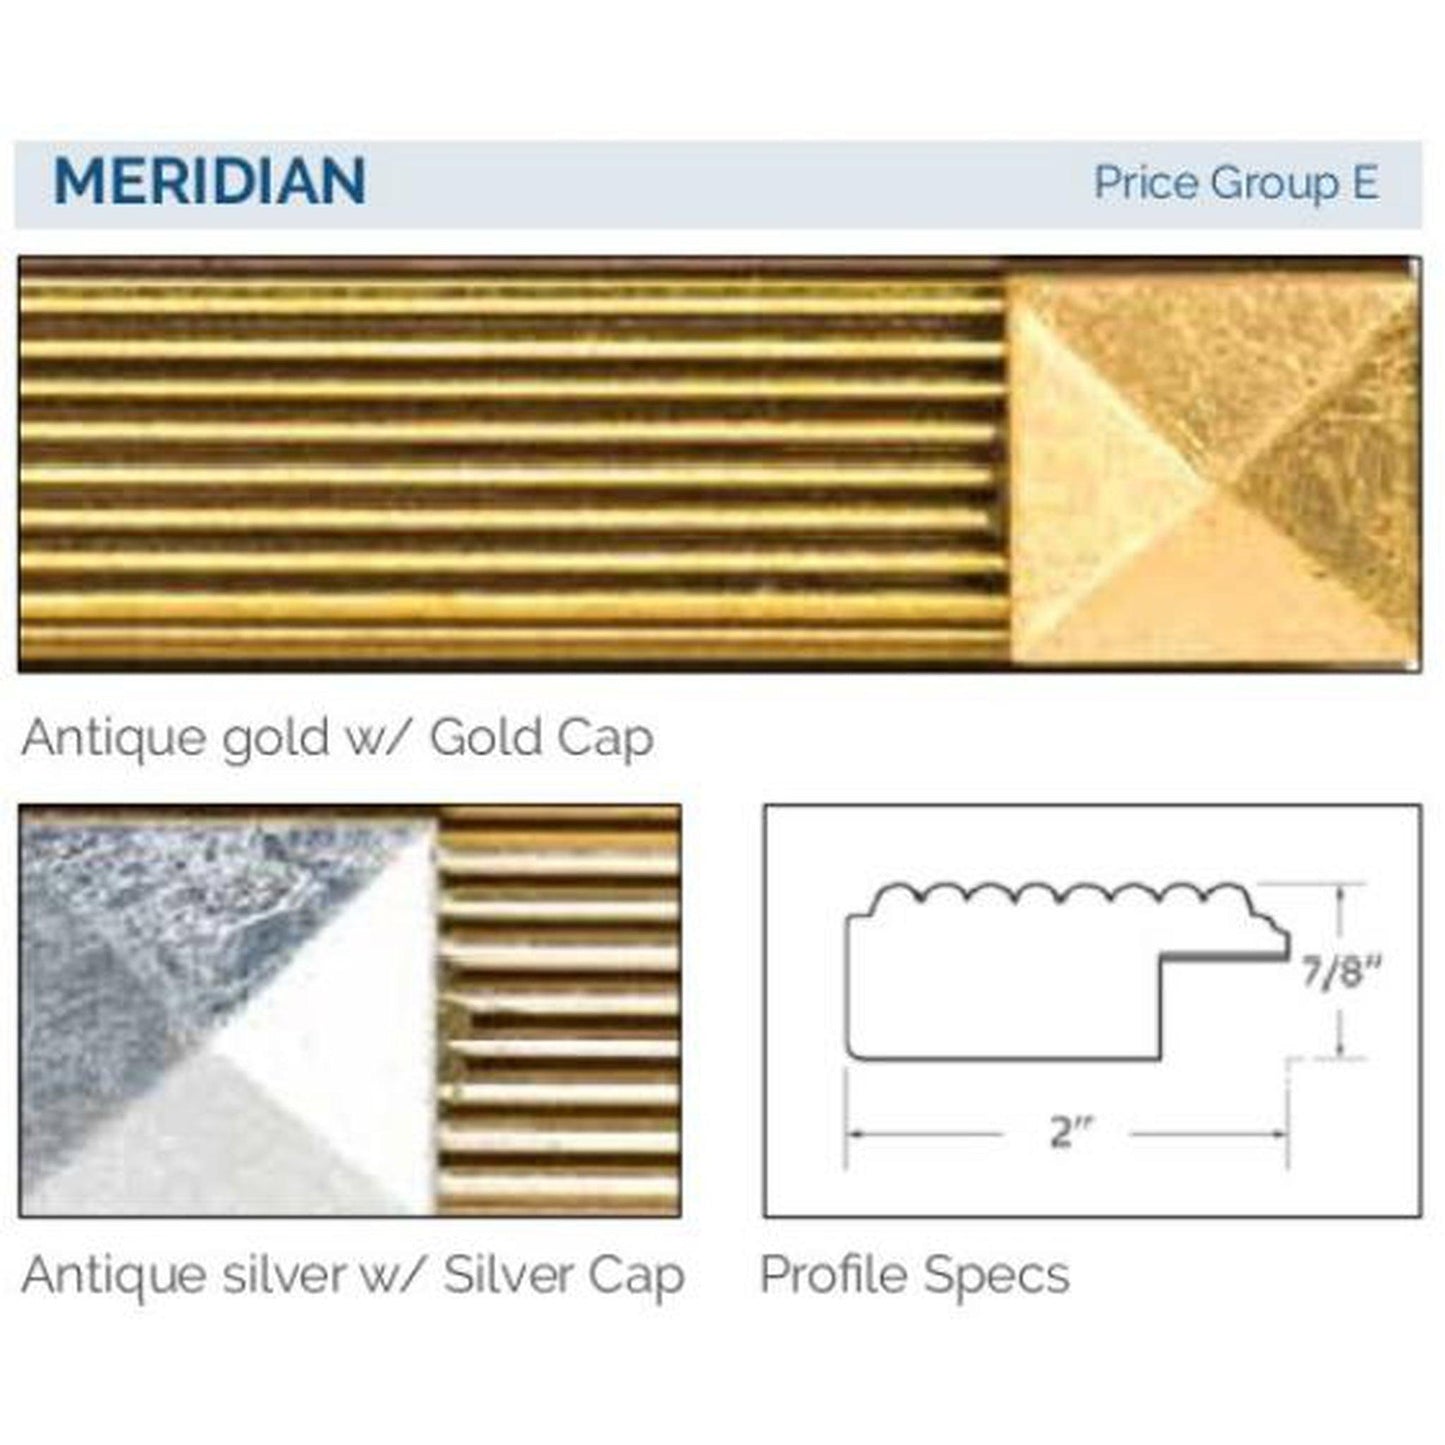 Afina Signature 34" x 30" Meridian Antique Gold With Antique Silver Caps Recessed Triple Door Medicine Cabinet With Beveled Edge Mirror